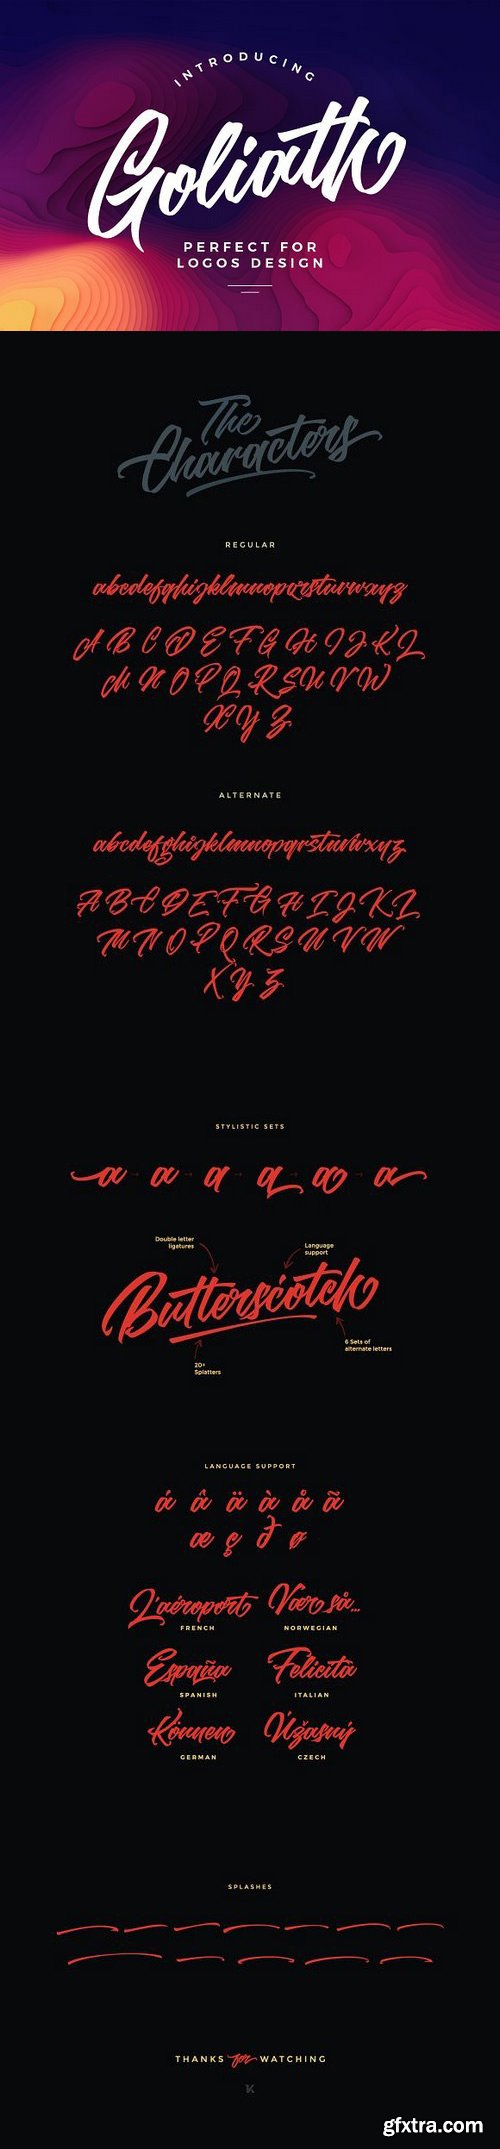 CM - Goliath script font 1583911